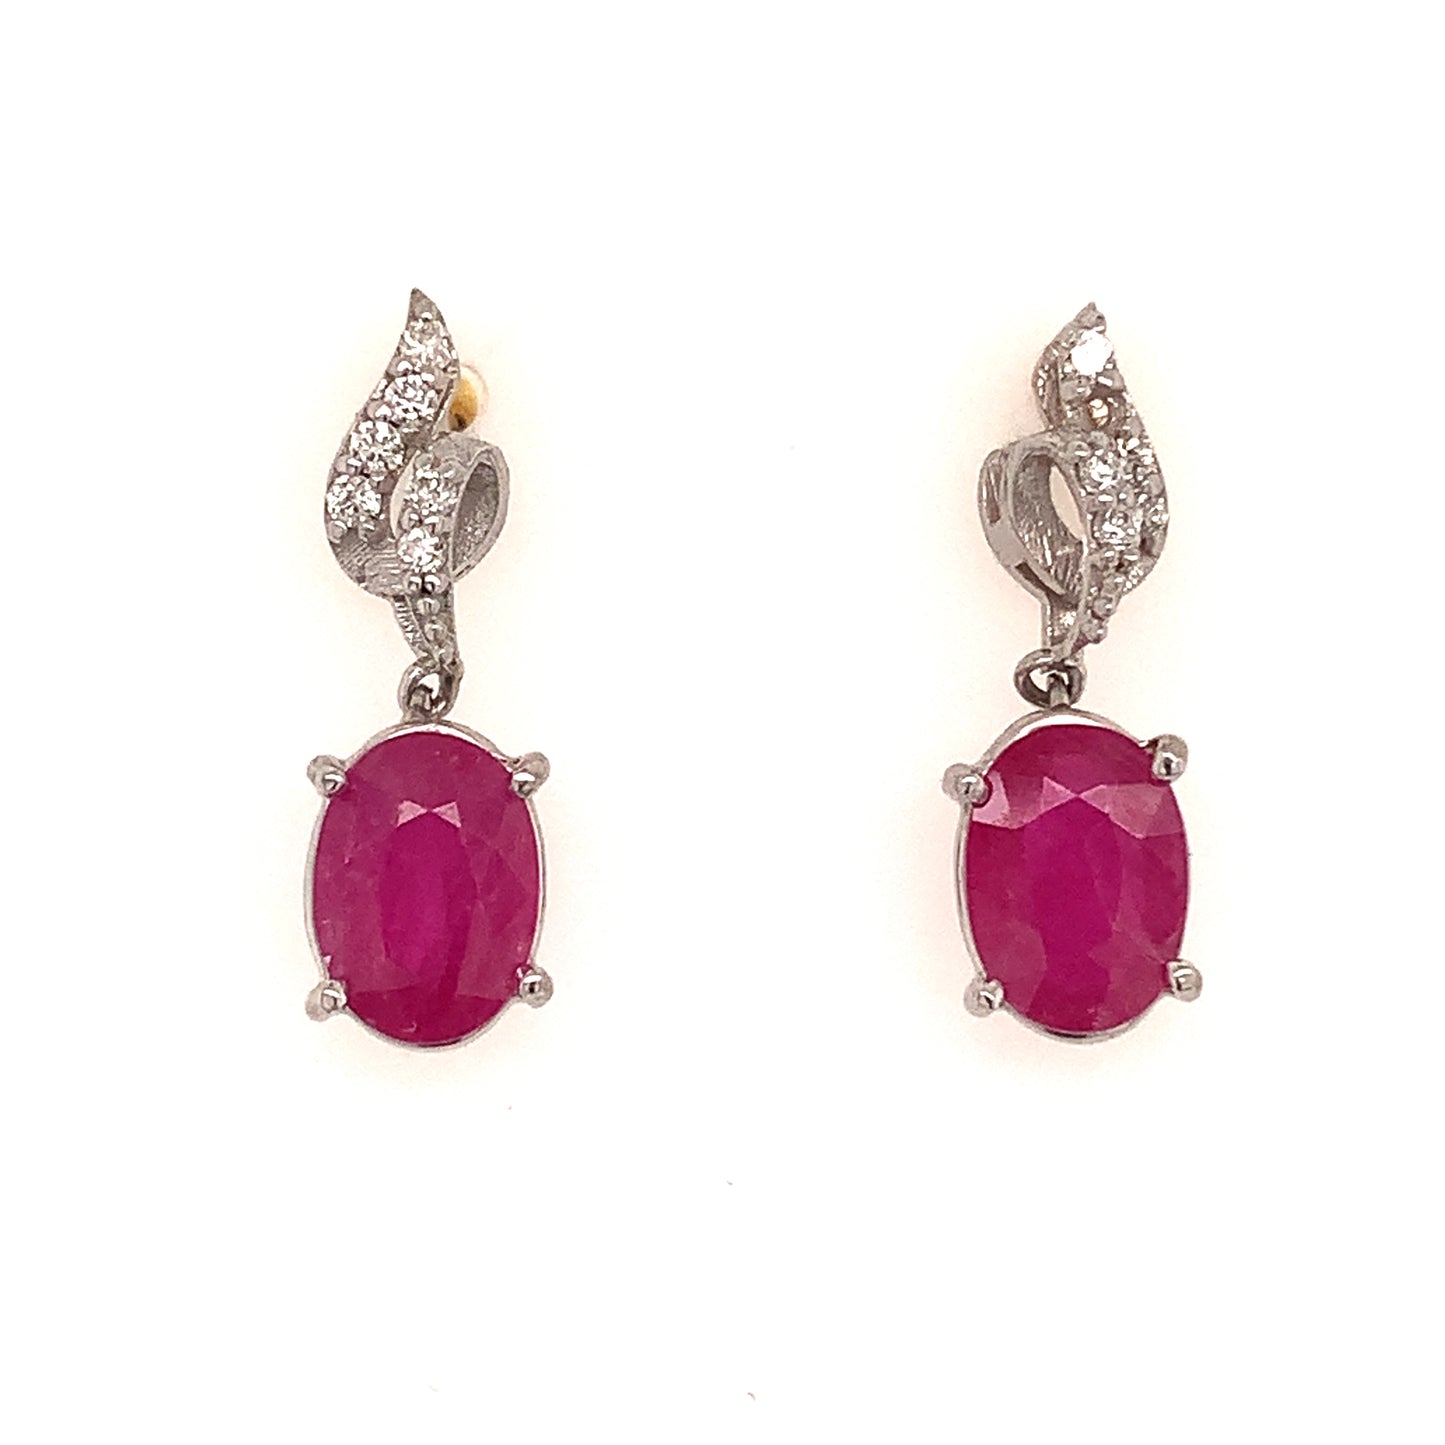 Natural Ruby Diamond Earrings 14k Gold 1.55 TCW Certified $3,050 018663 - Certified Estate Jewelry